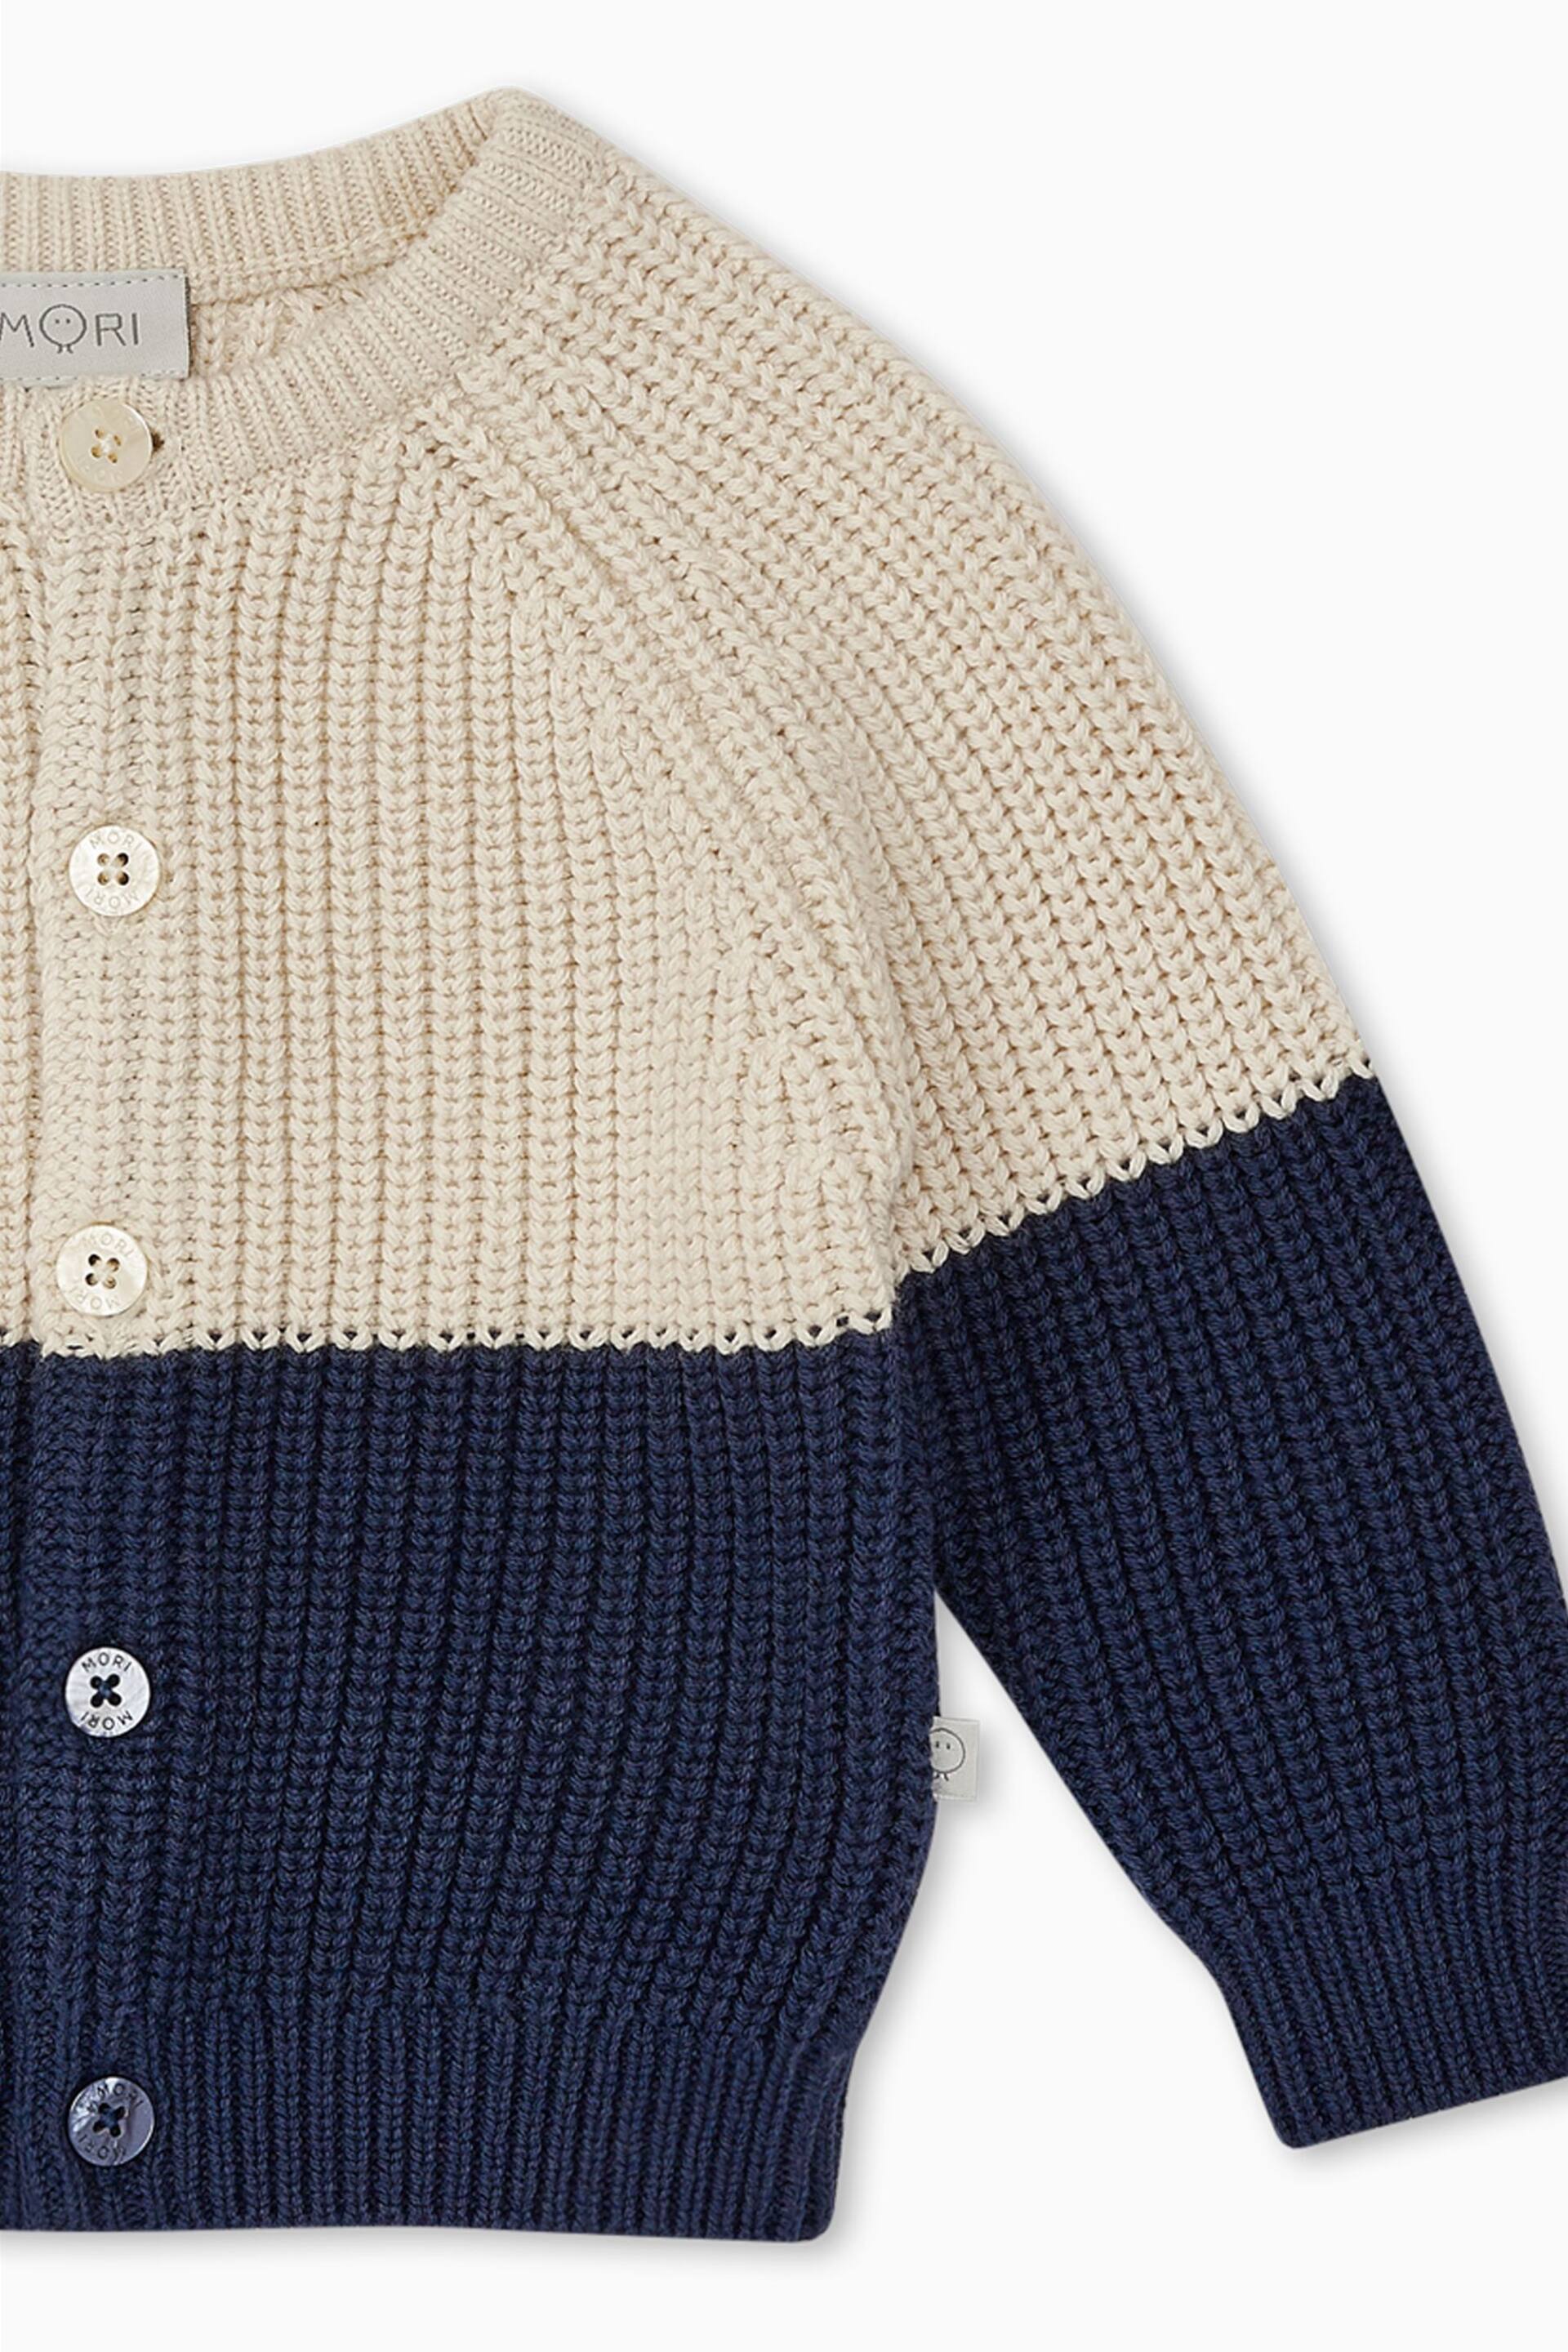 MORI Blue Organic Cotton Colourblock Knitted Cardigan - Image 4 of 4